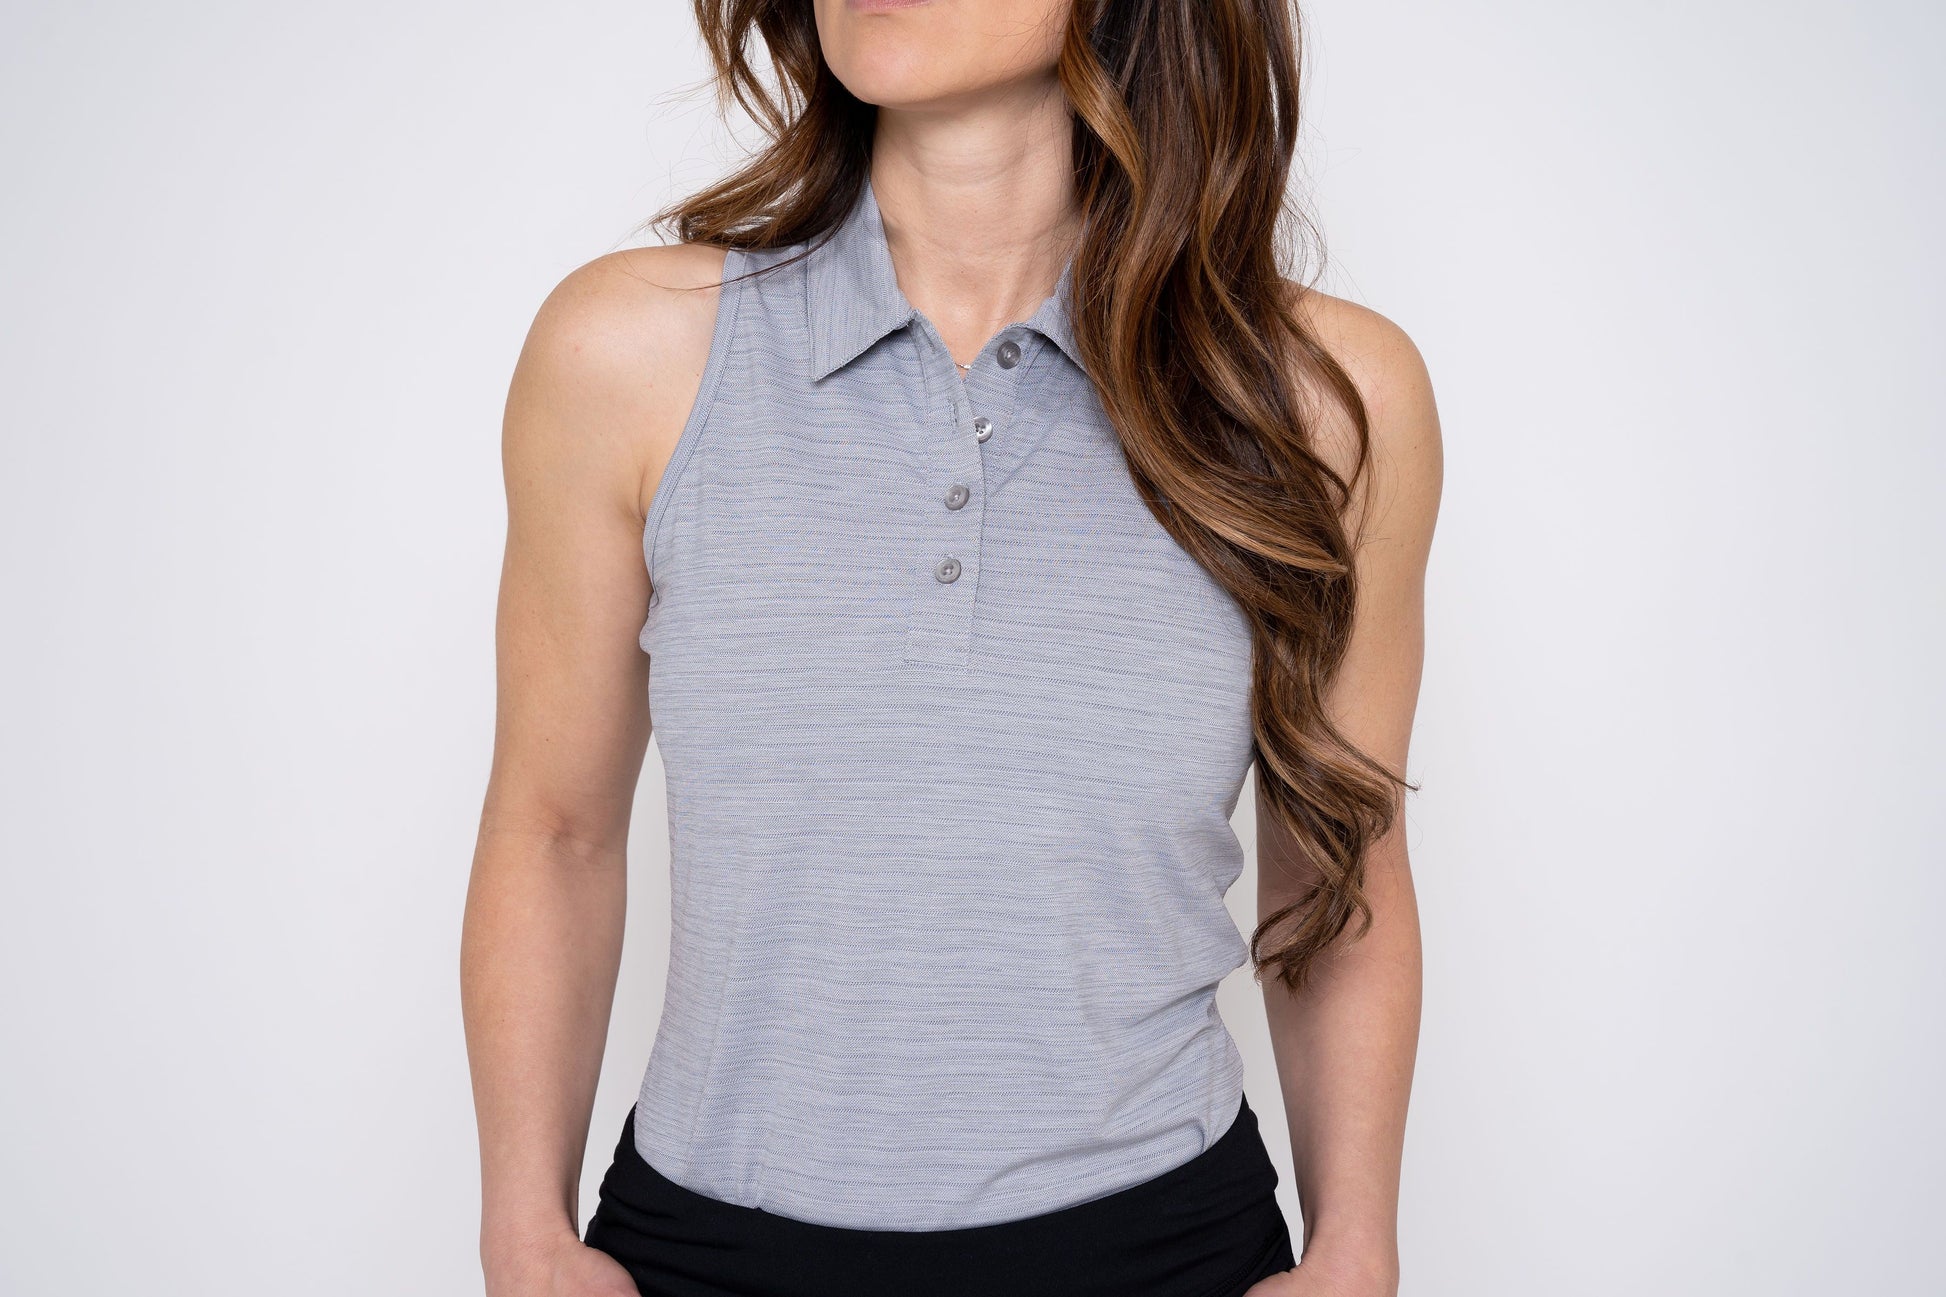 Sleeveless Golf Shirt - Grey Women's Golf Shirt Taylor Jordan Apparel Grey X-Small 